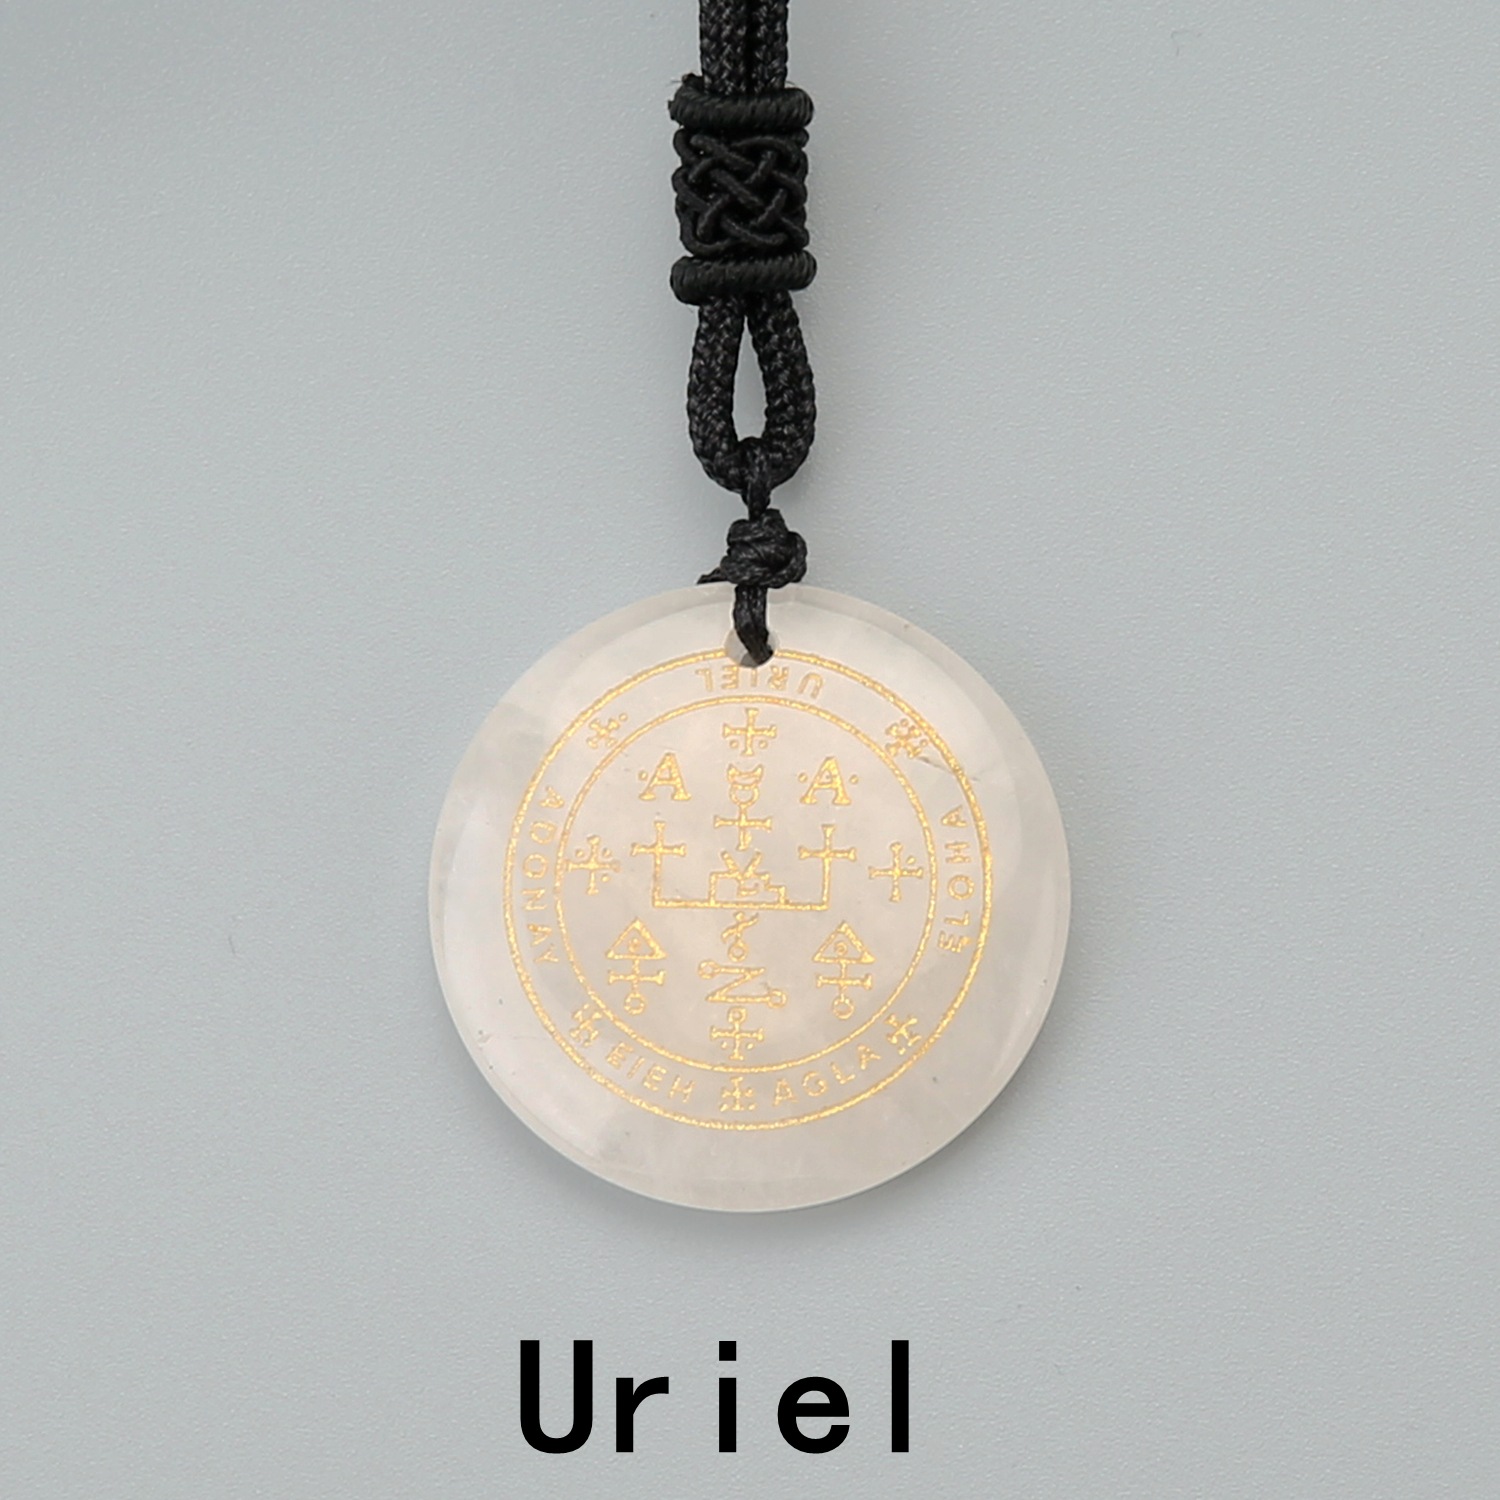 14:Uriel